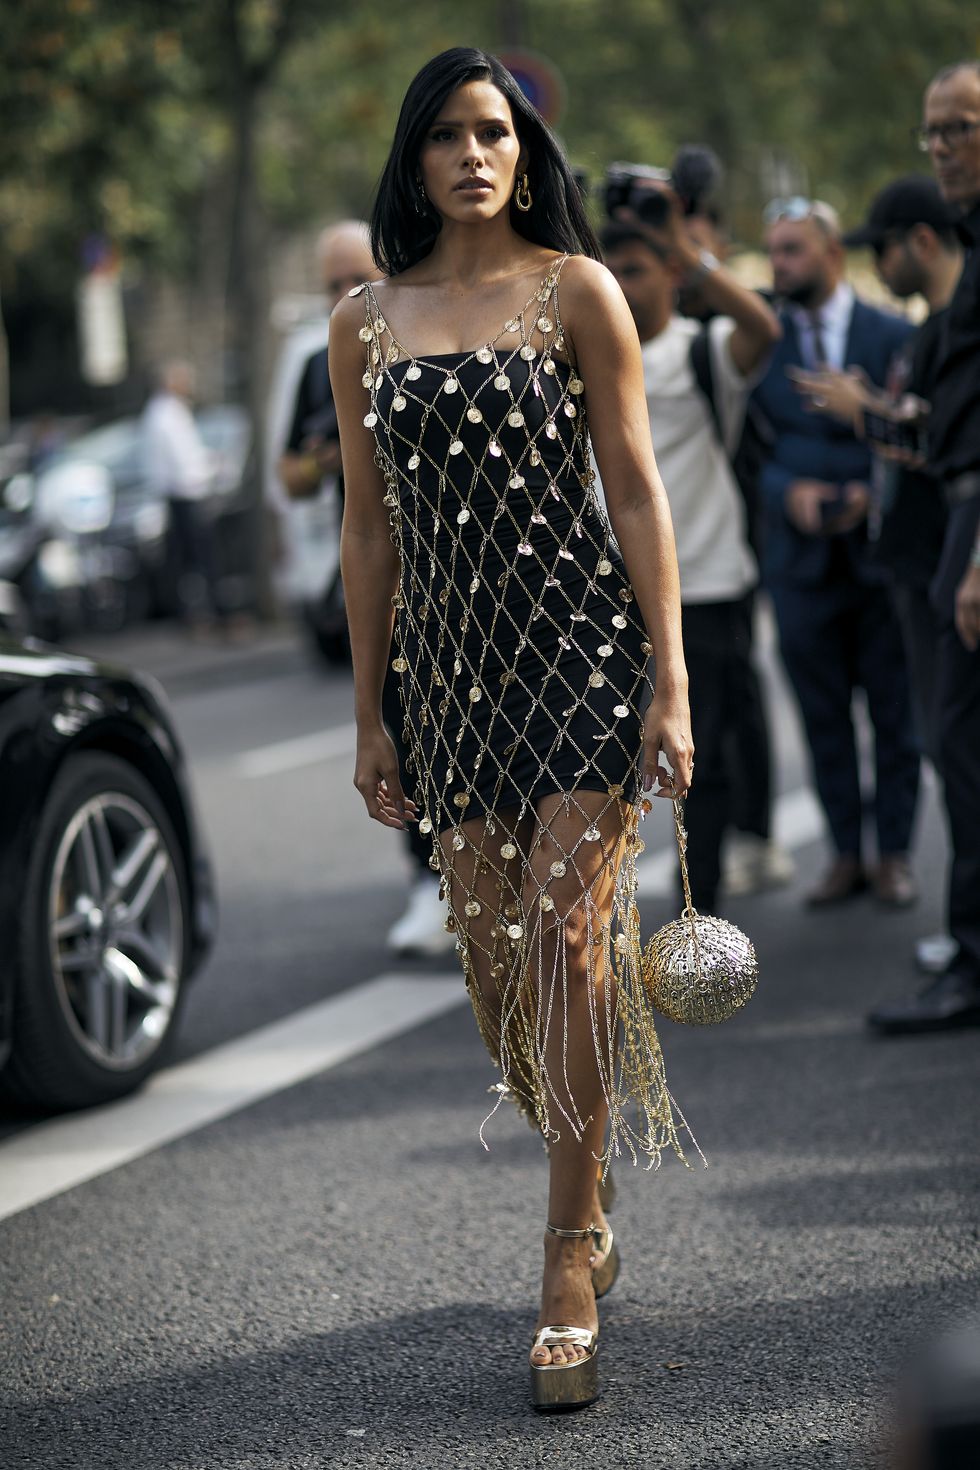 Street Style Looks We Loved at Paris Fashion Week Spring 2023